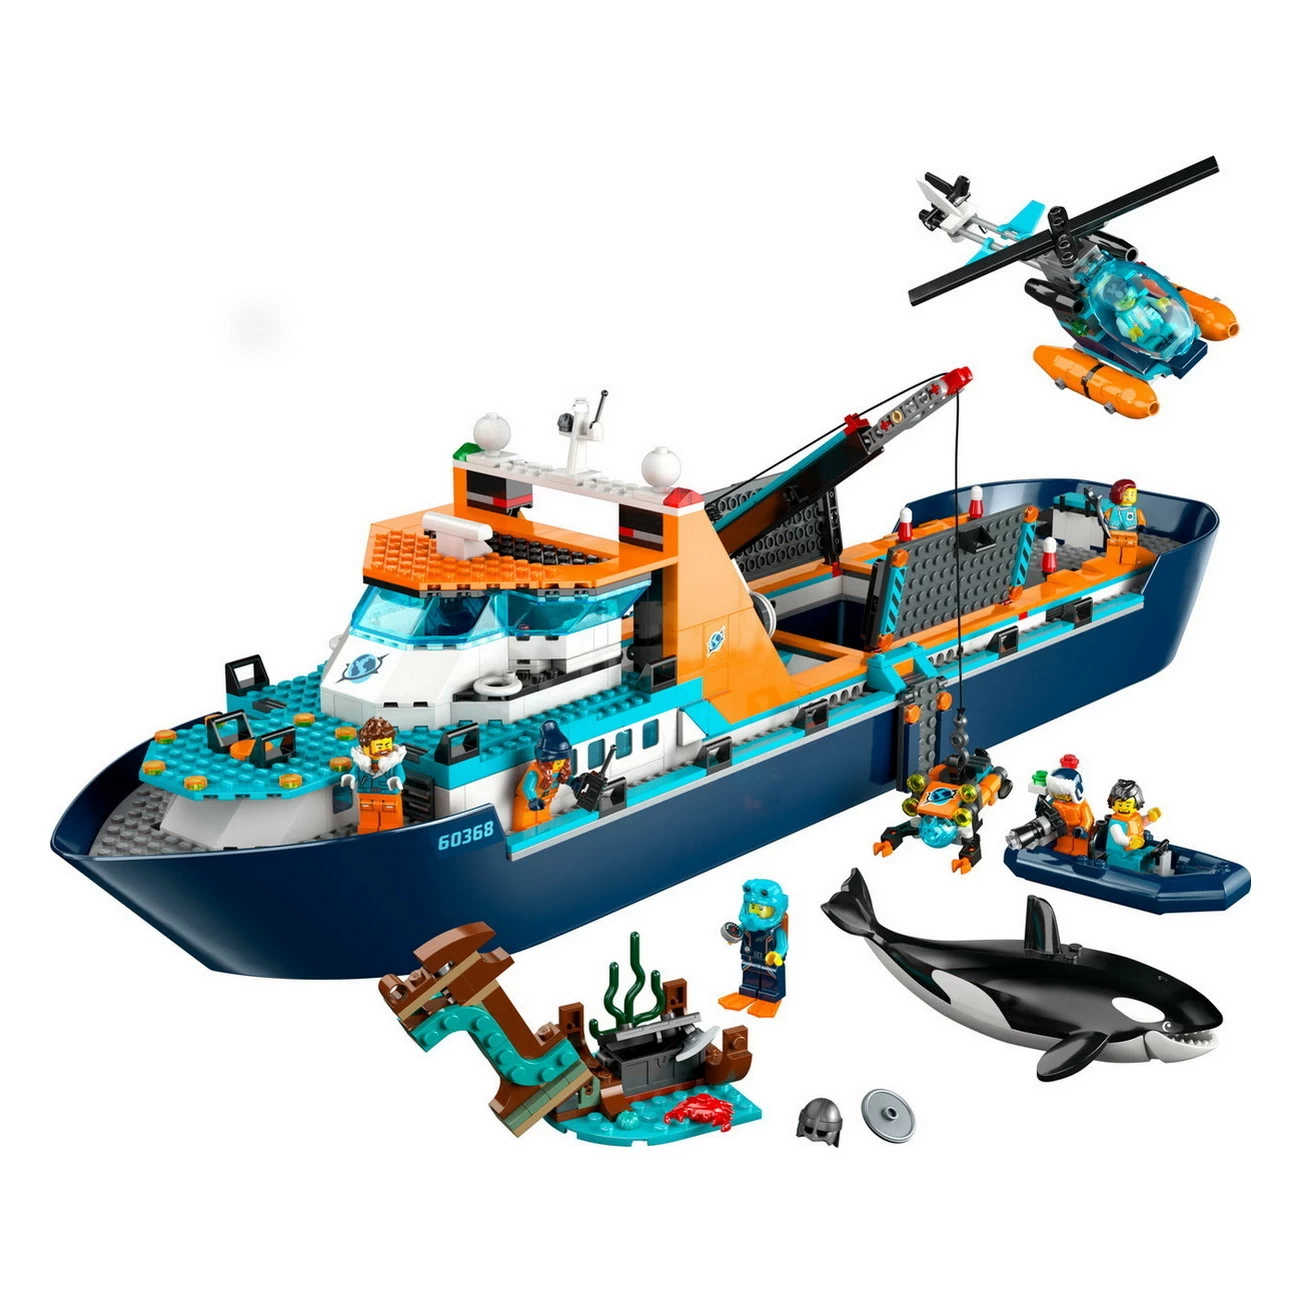 LEGO City 60368 - Arktis-Forschungsschiff